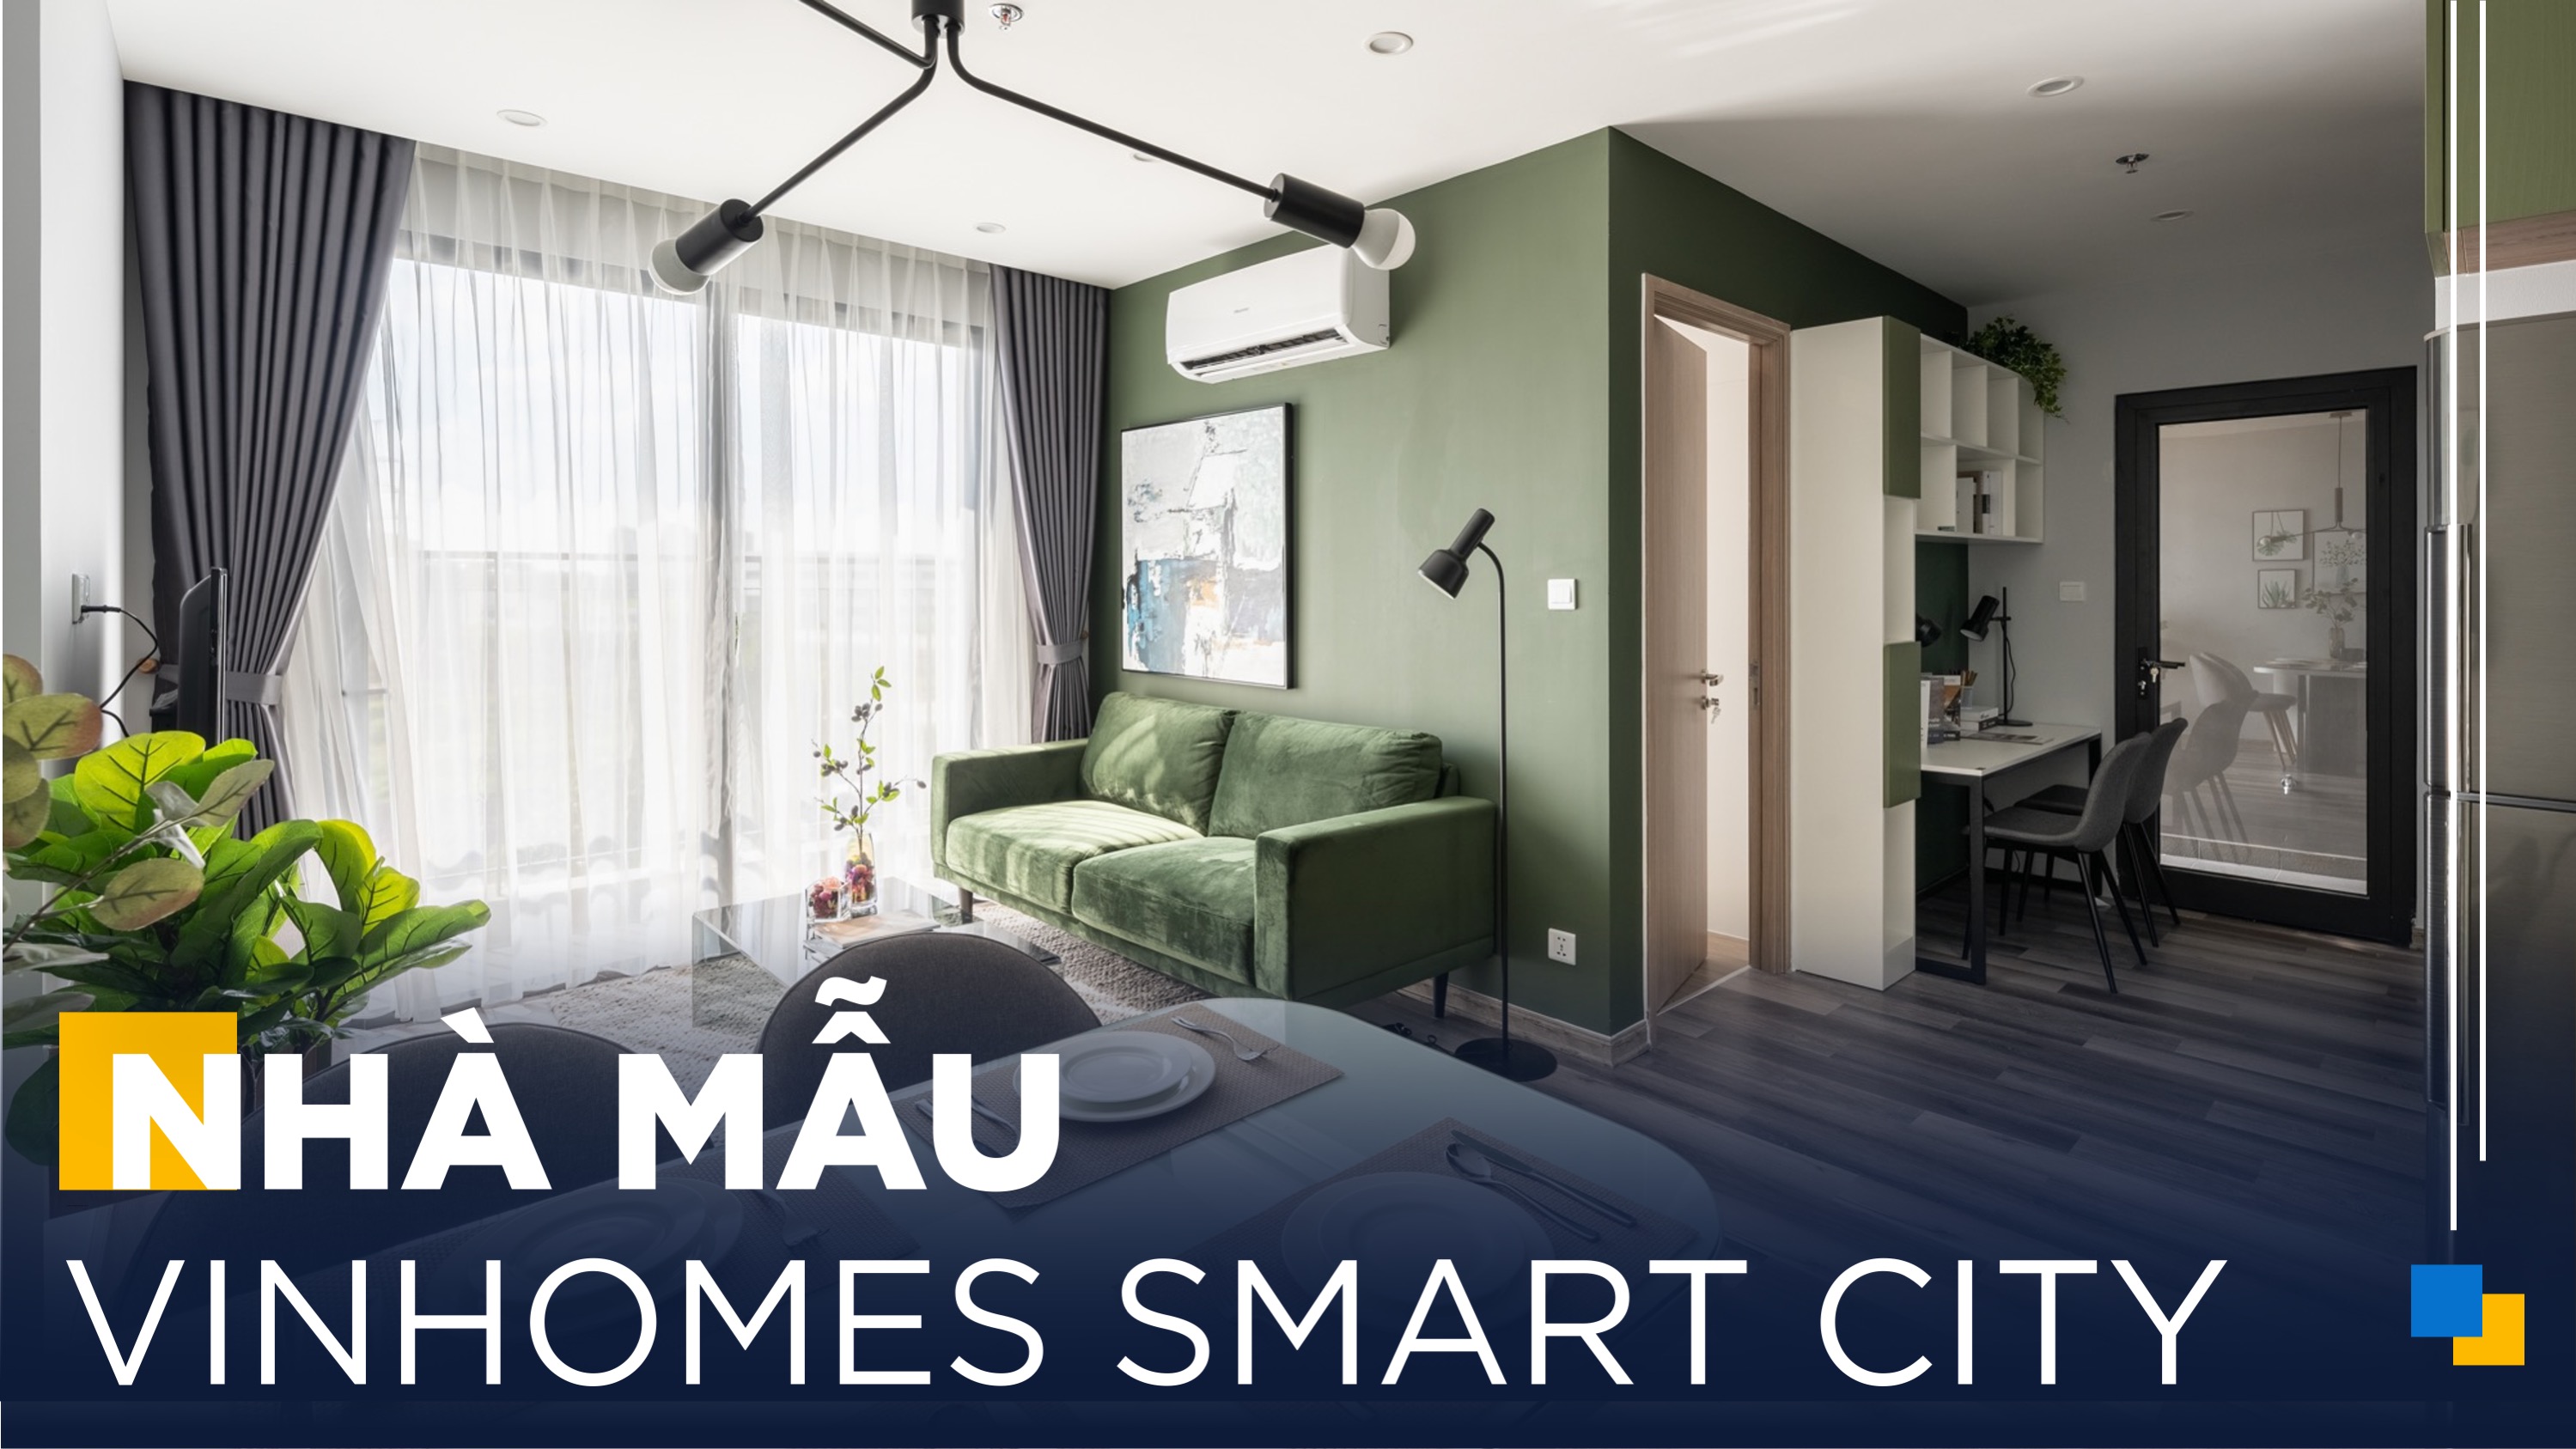 An Cuong Wood | "Super Comfortable" 2 Bedroom Apartment in Vinhomes Smart City